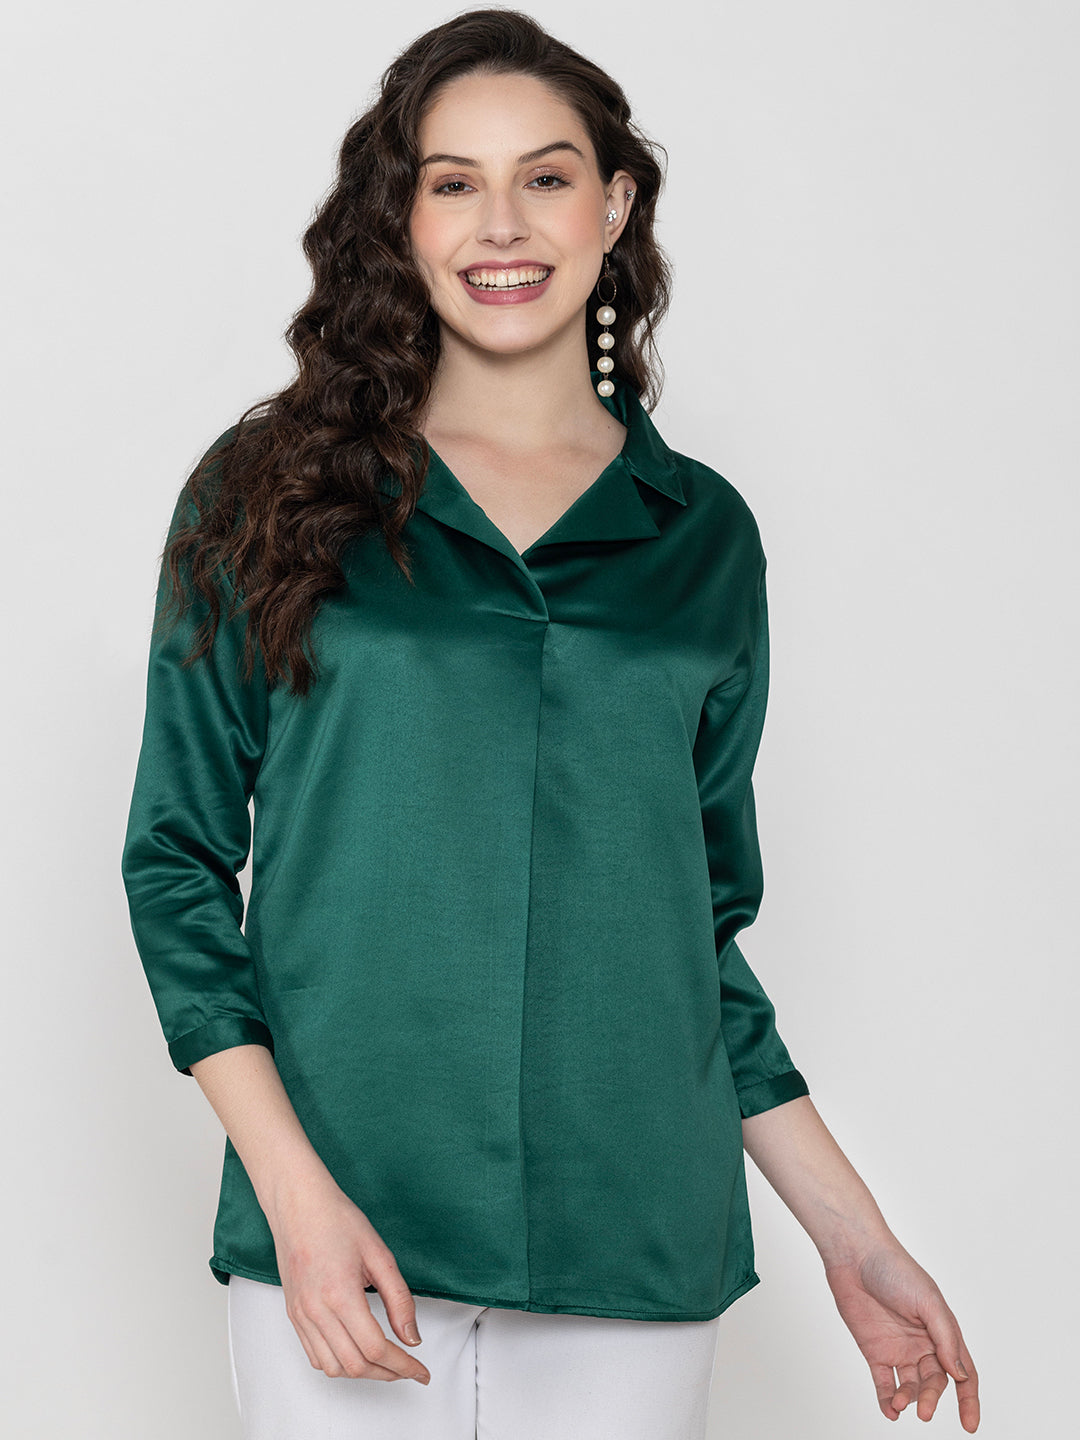 Dark Green Solid Satin Collar Shirt  Women's Top